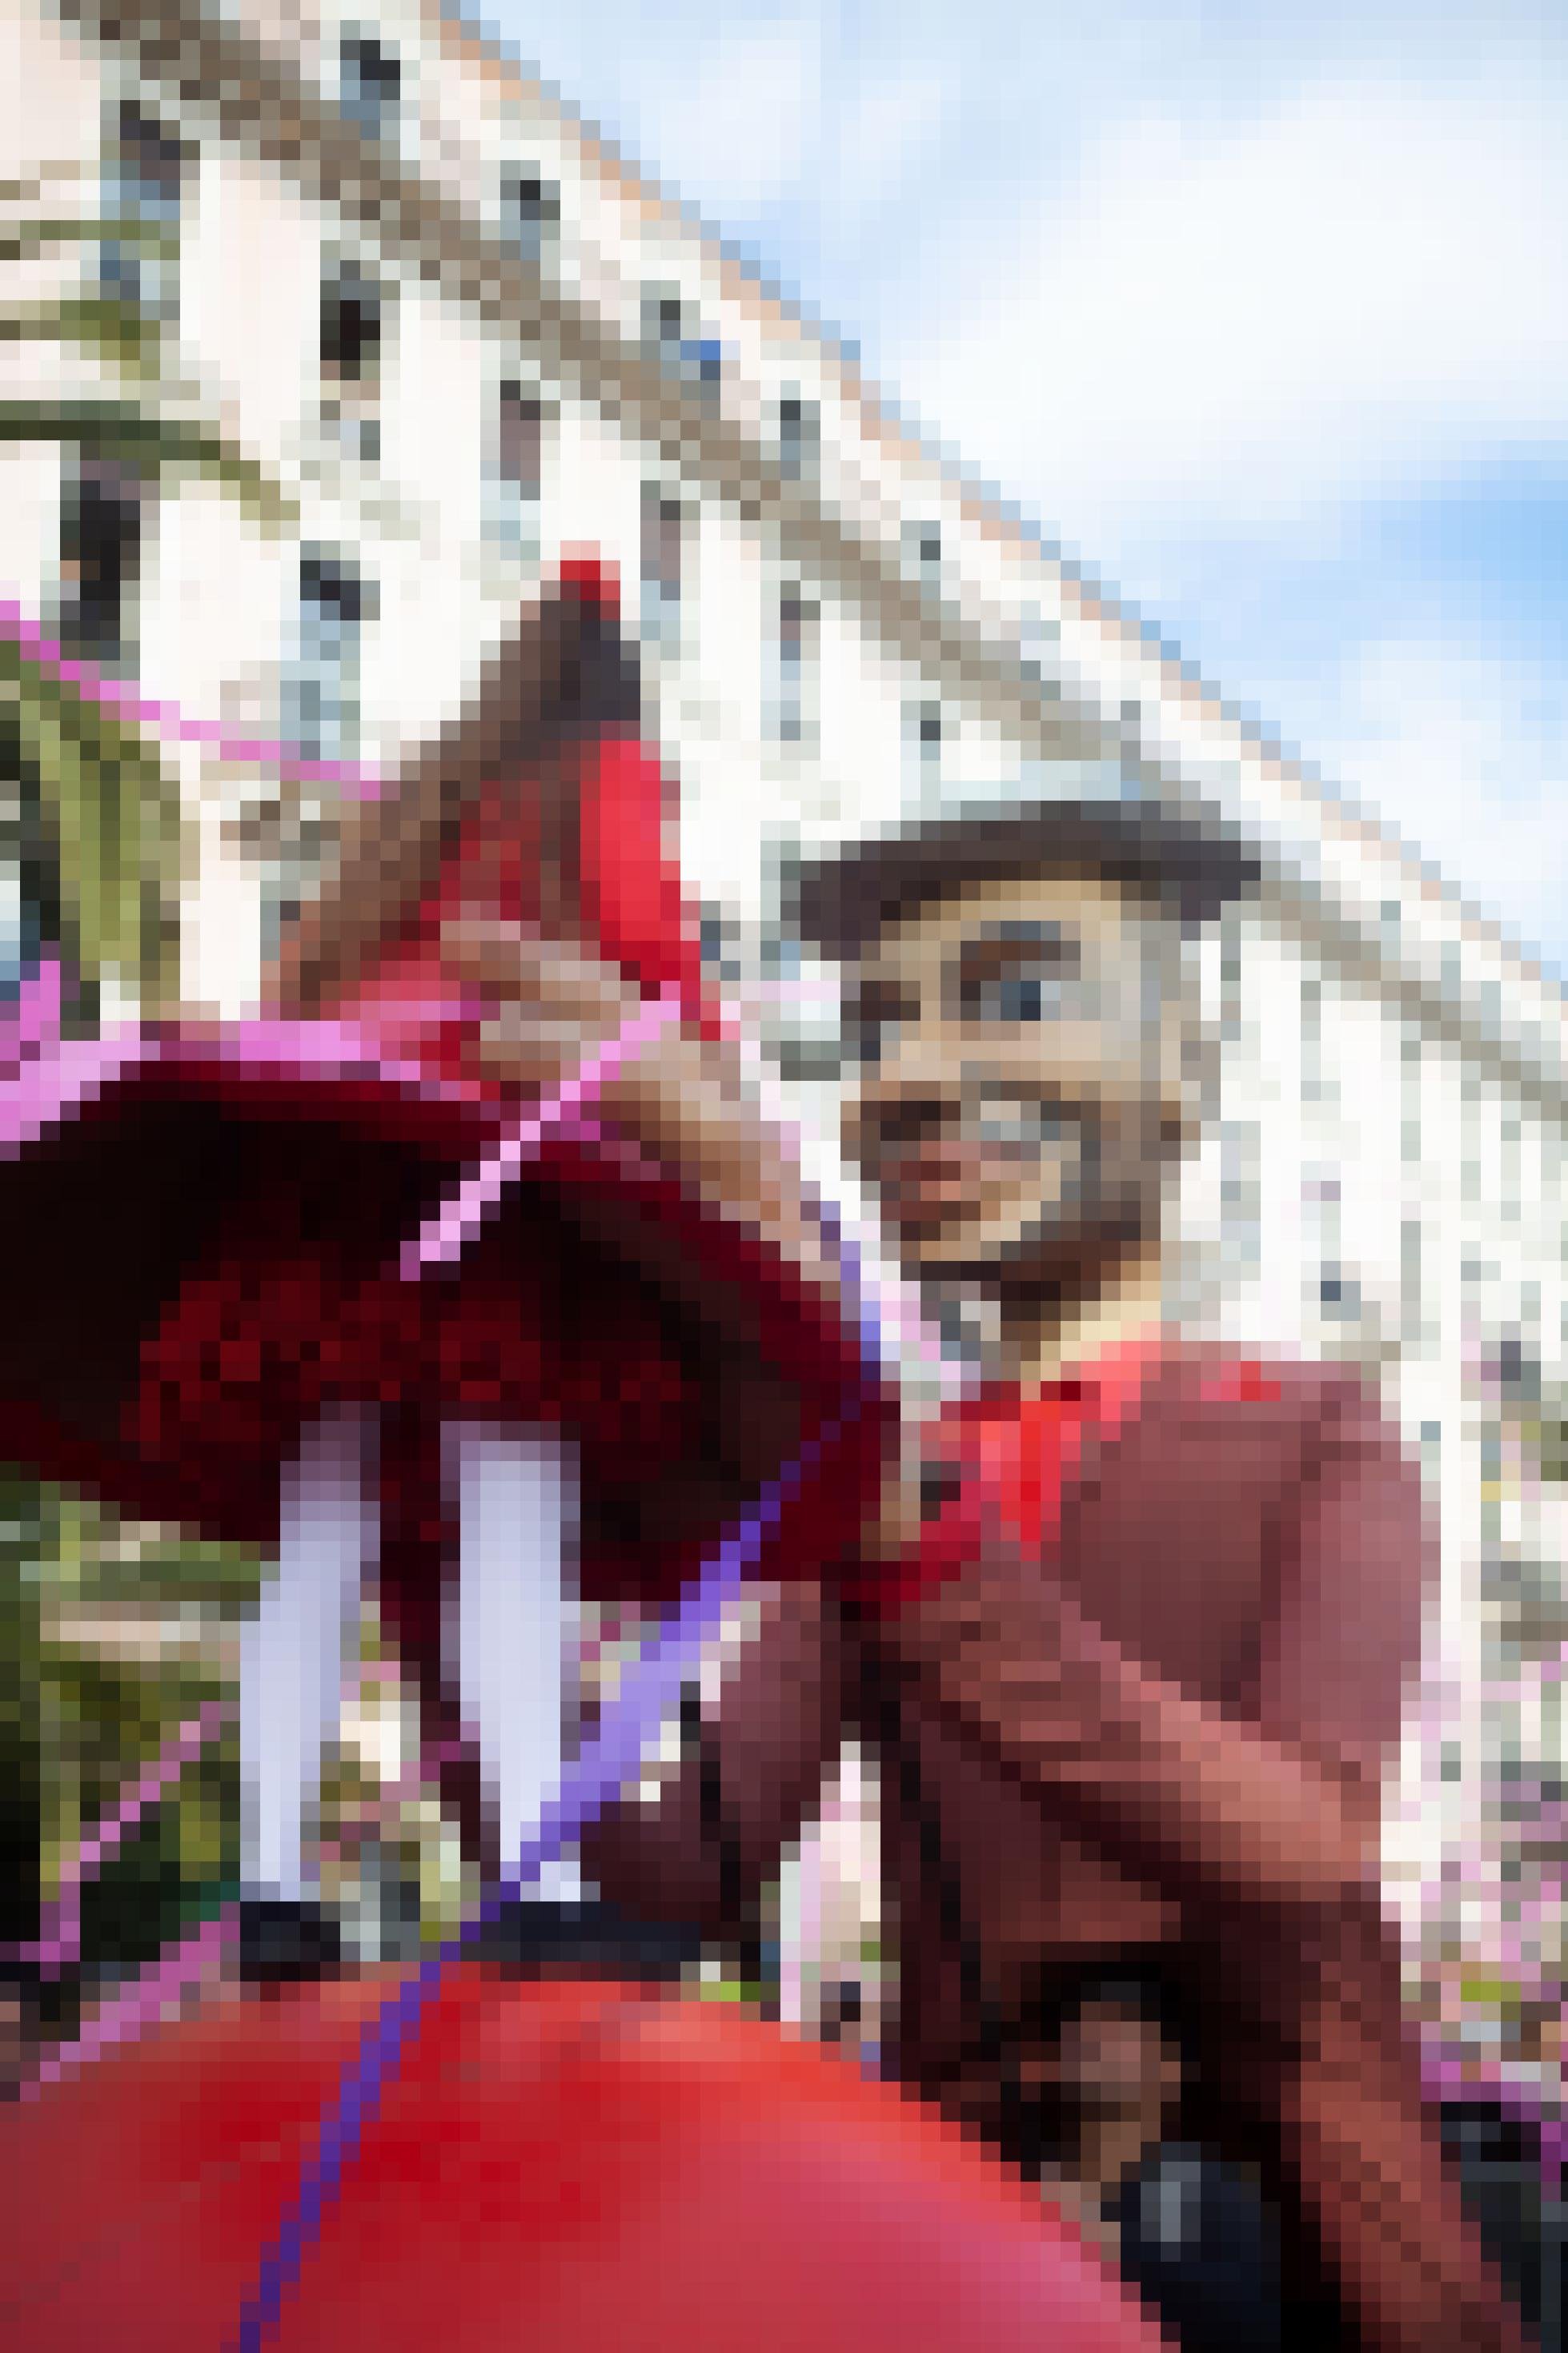 Marionettenartige Figur beim Karnevalsumzug in Nizza